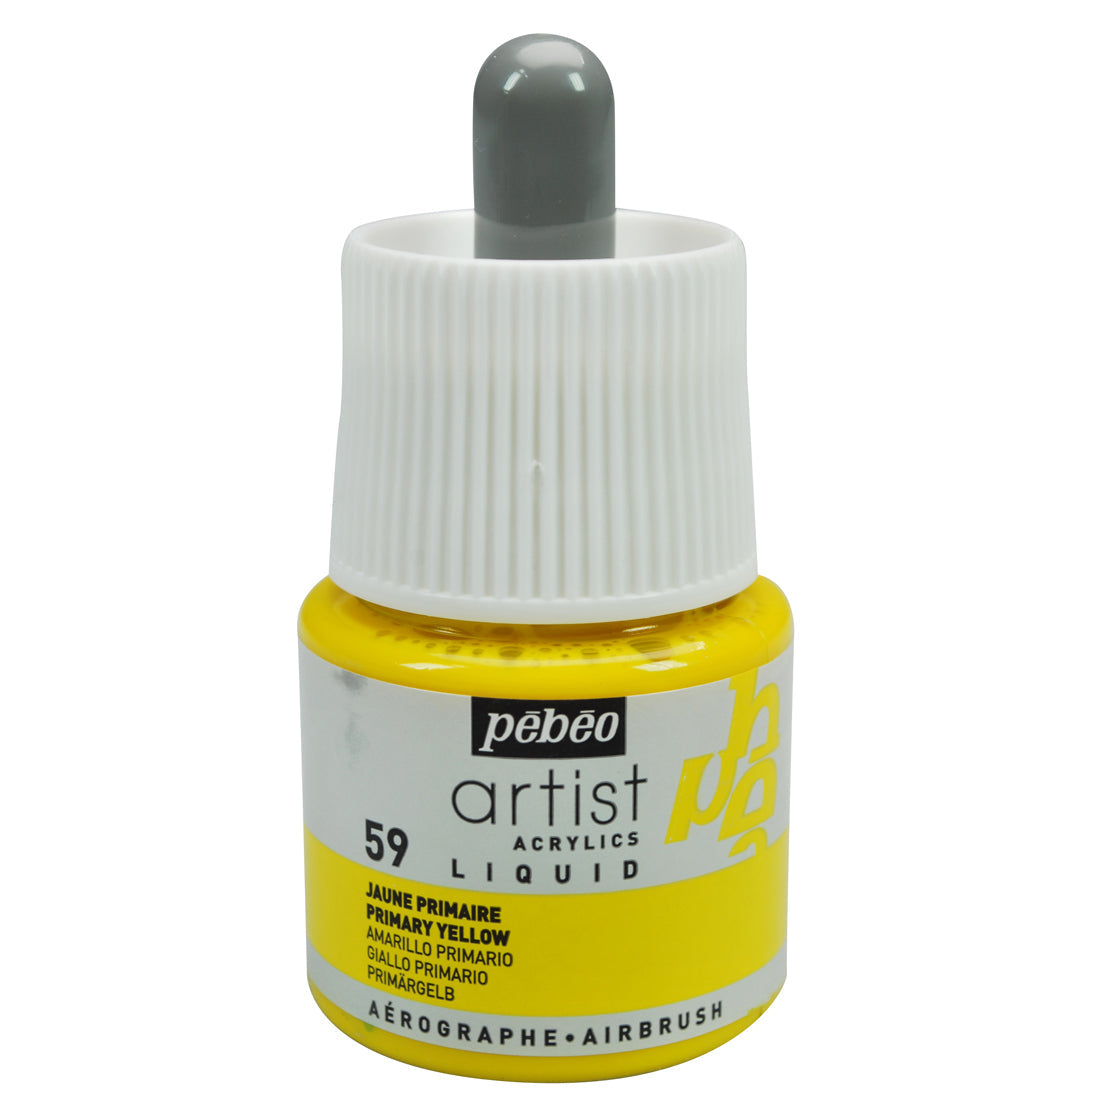 Pebeo Artist Acrylics Liquid Ink 45ml - Primary Yellow